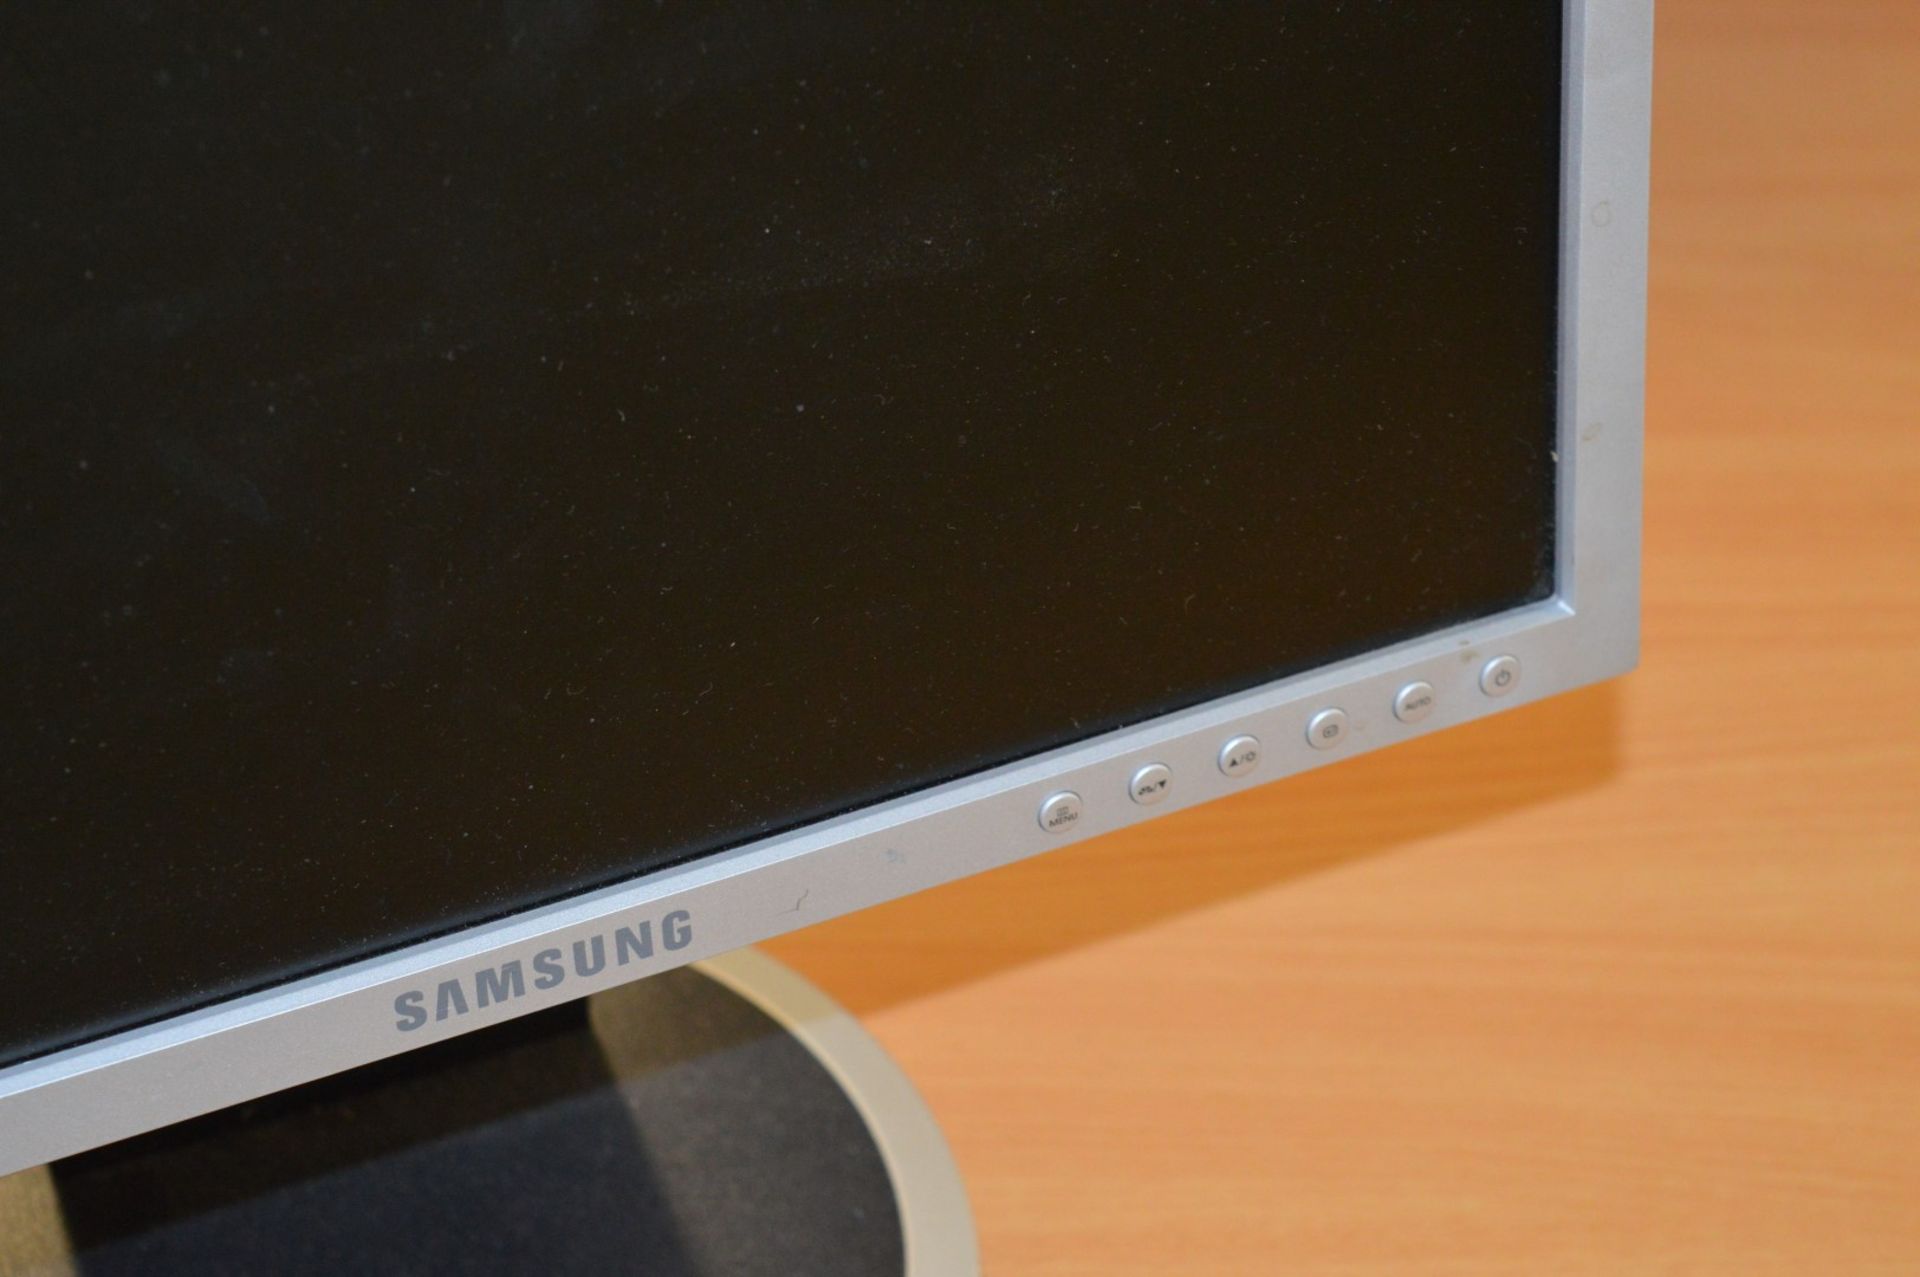 1 x Samsung Syncmaster 740B Flatscreen LCD Monitor - 17 Inch Screen Size - 1280 x 1024 Native - Image 5 of 6